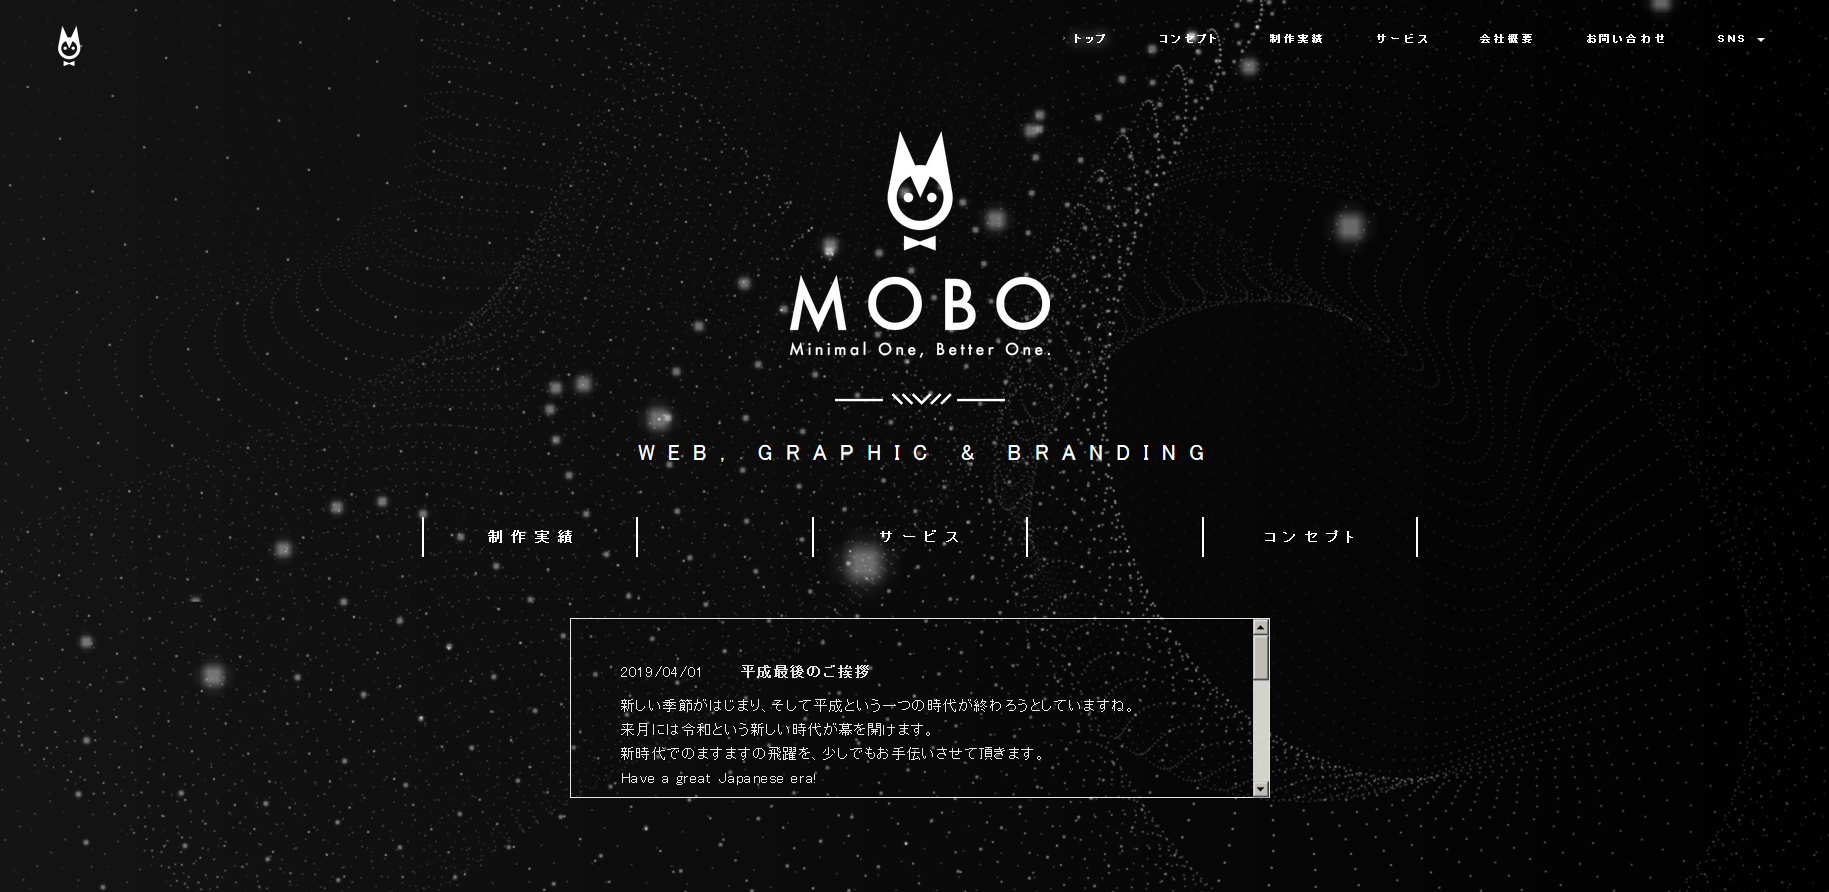 MOBO株式会社のMOBO株式会社サービス